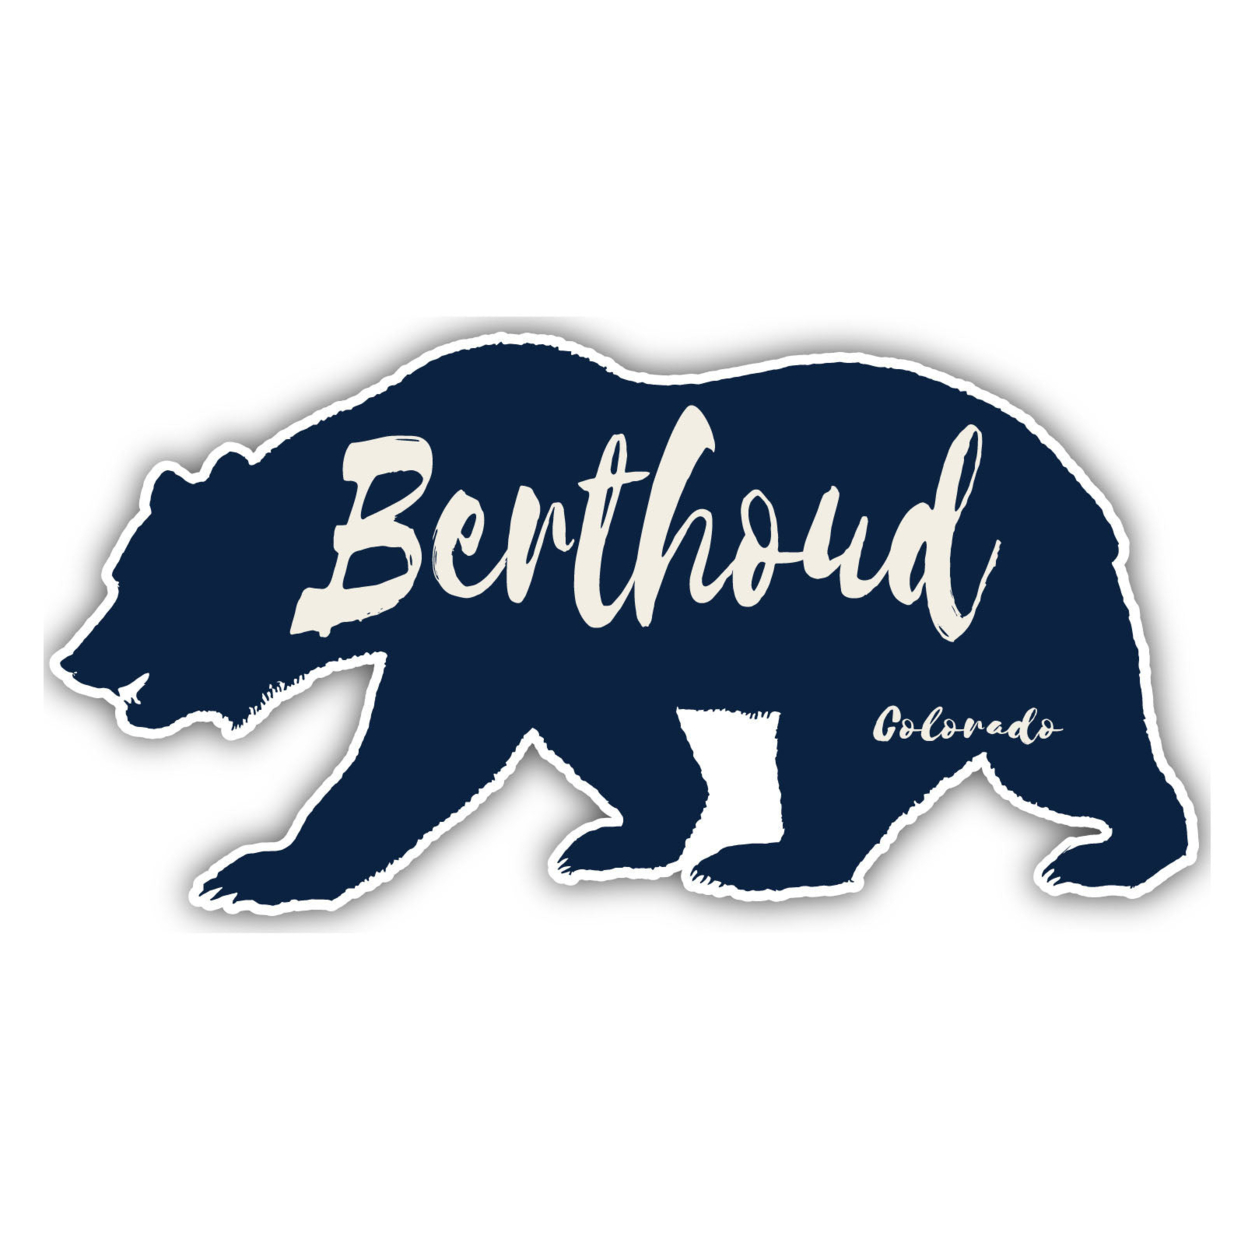 Berthoud Colorado Souvenir Decorative Stickers (Choose Theme And Size) - 4-Pack, 6-Inch, Bear